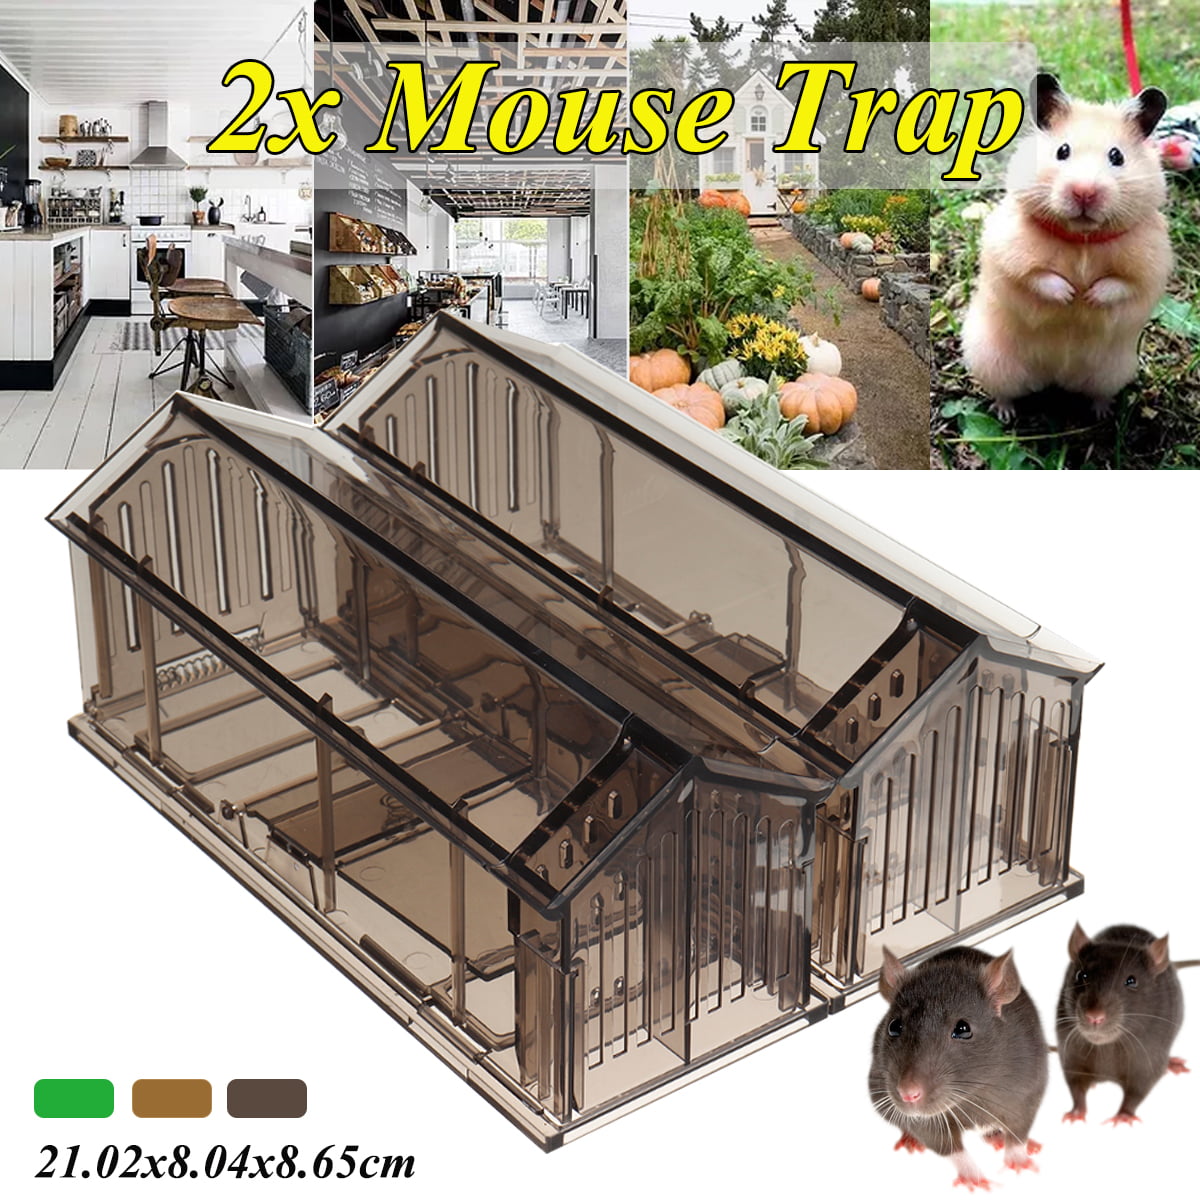 2x Reusable Humane Mouse Trap Rodent Mice Live Catch Cage Safe Auto